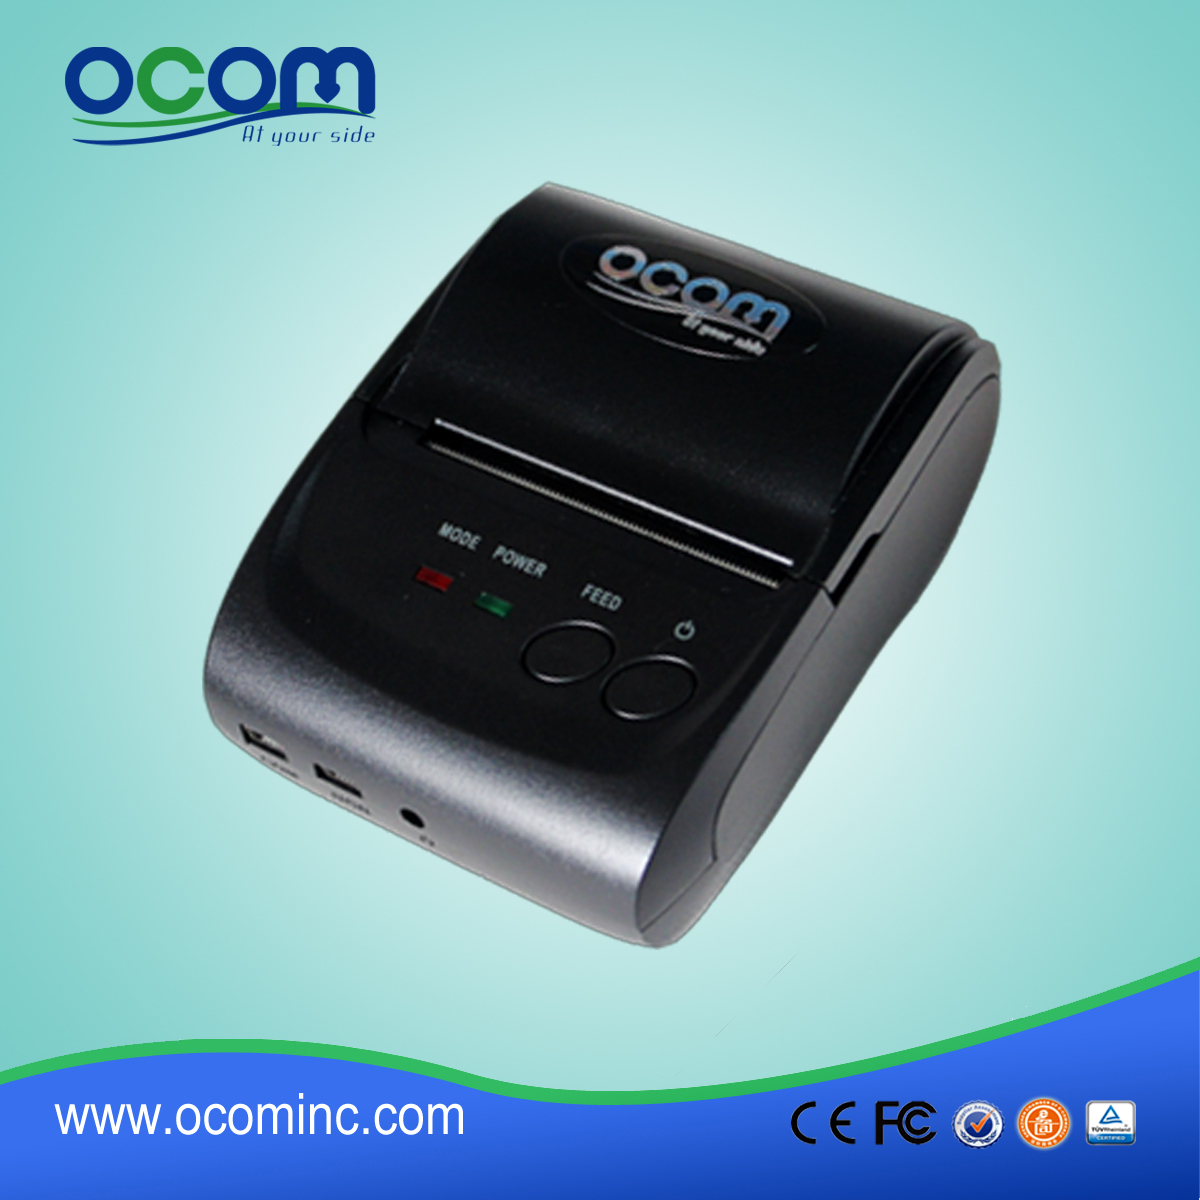 OCPP-M05：好品质！新产品之便携式安卓蓝牙小票打印机